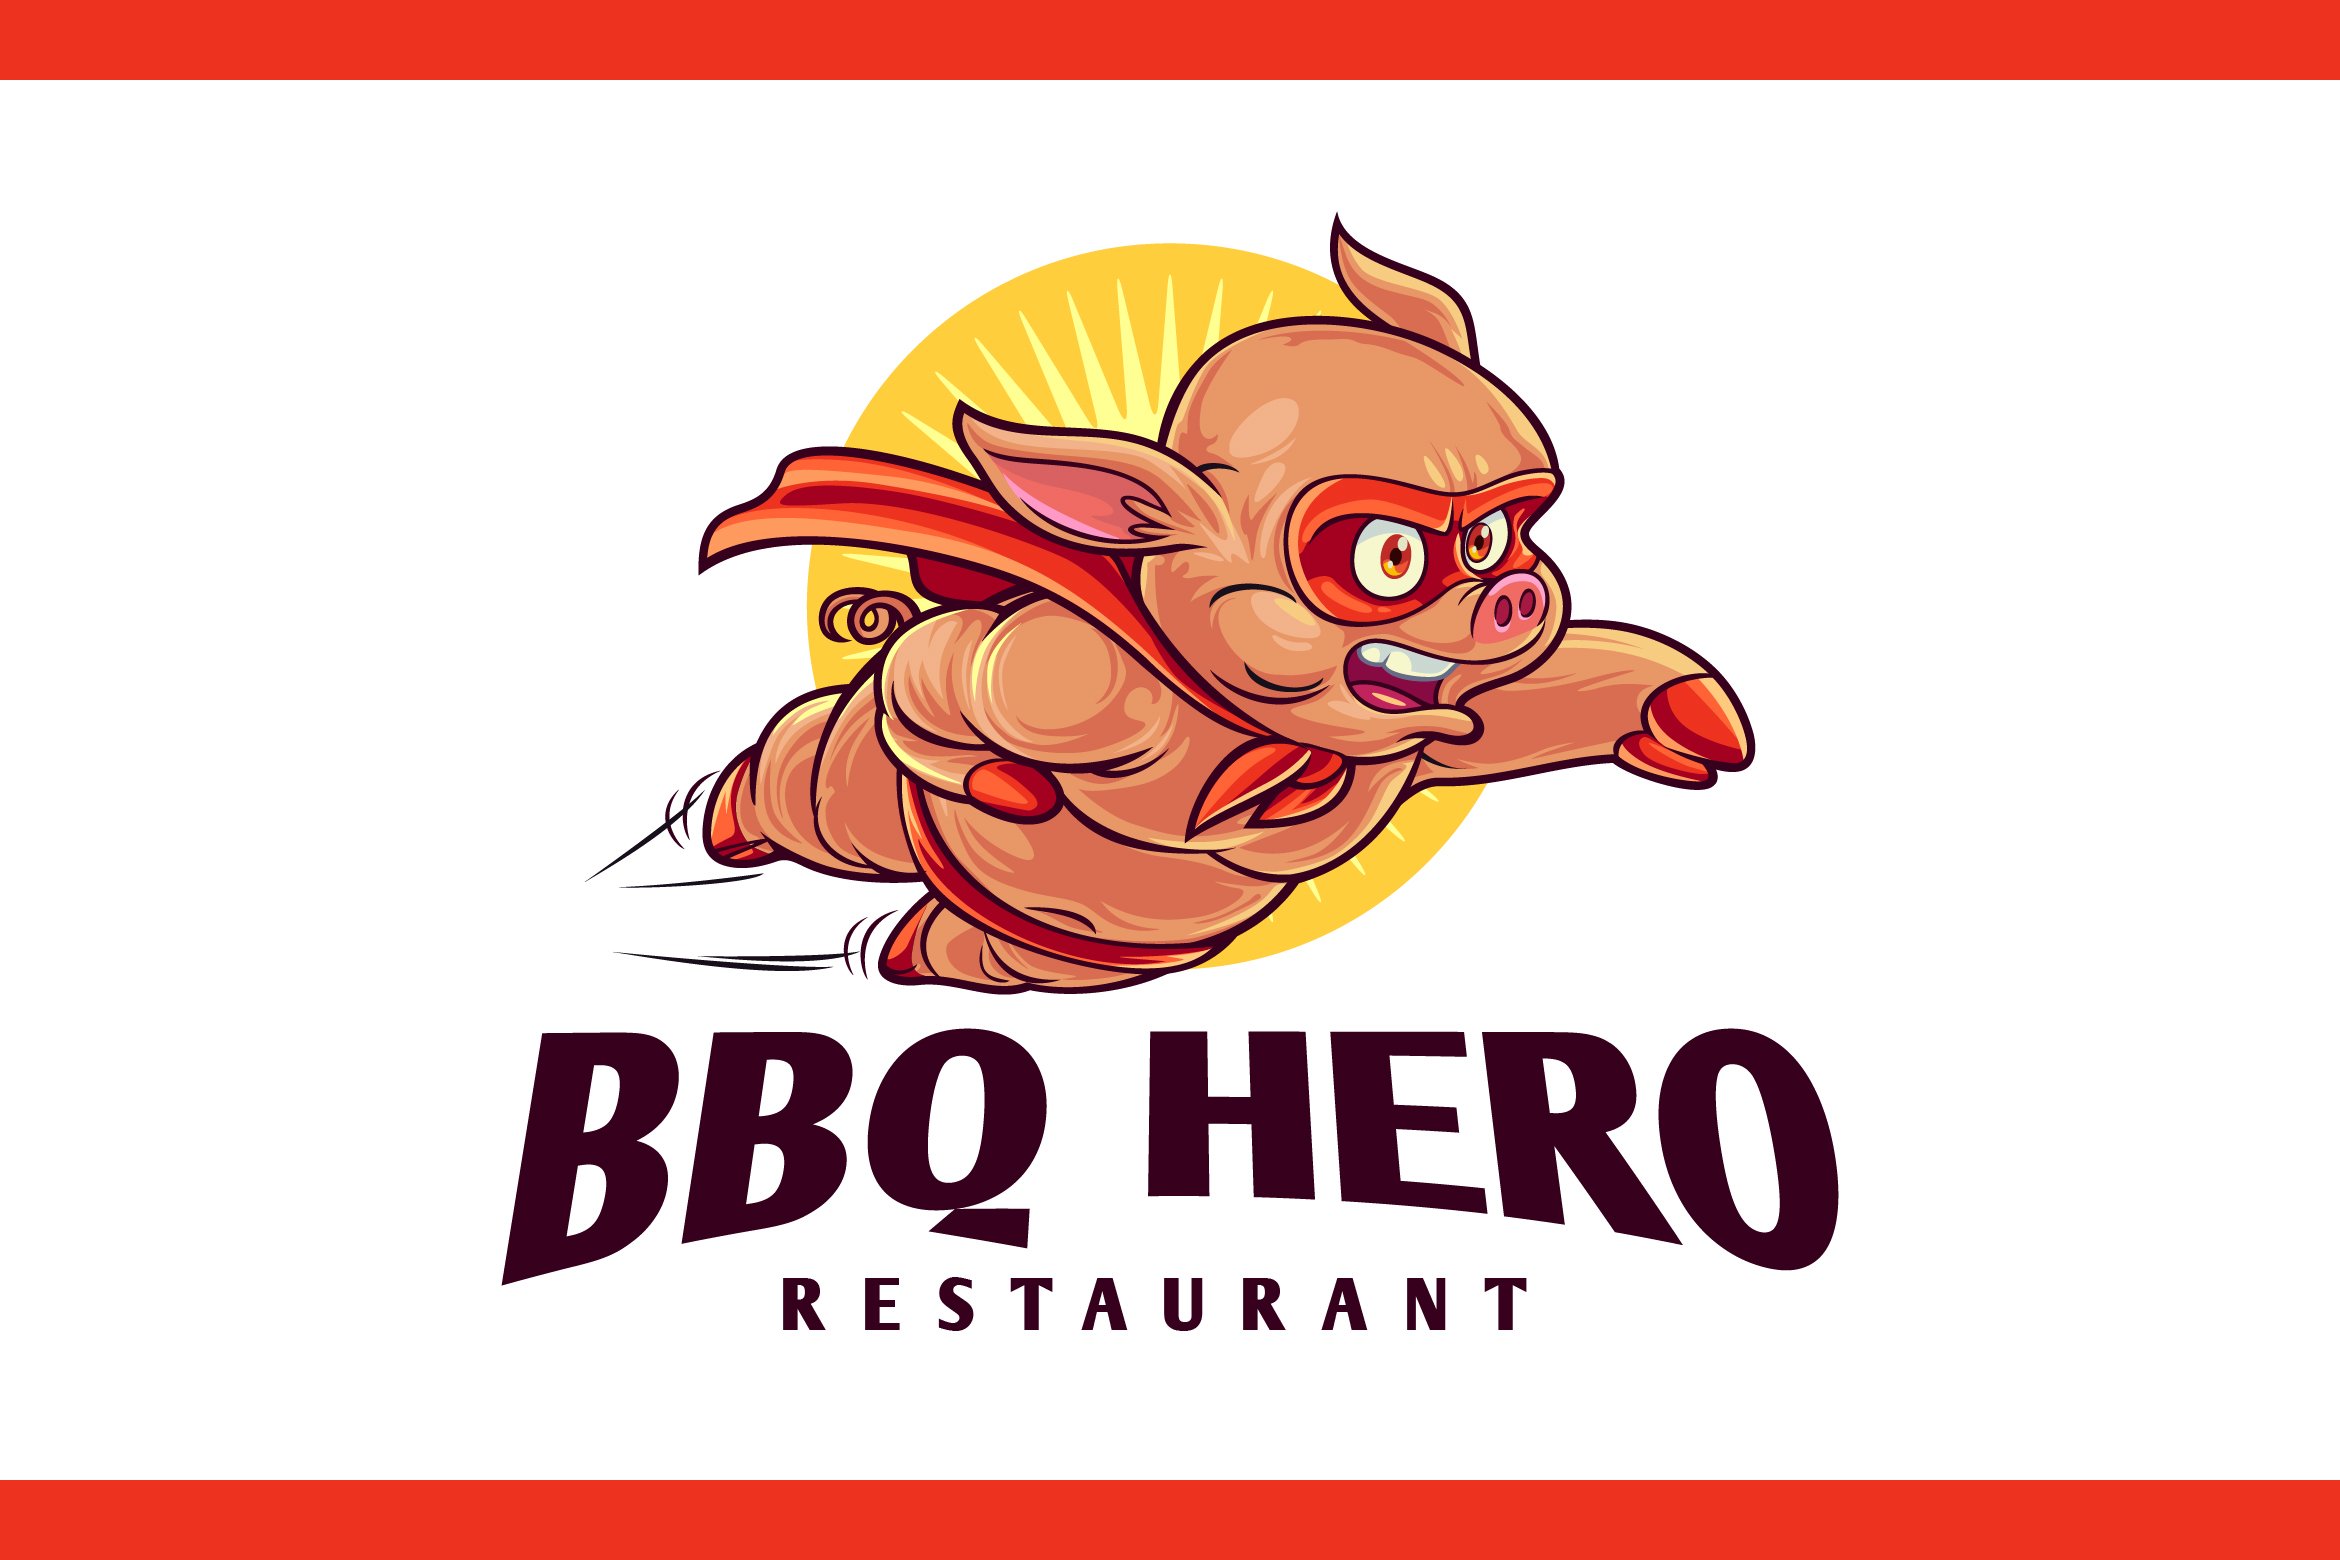 Pig Hero Mascot Logo cover image.